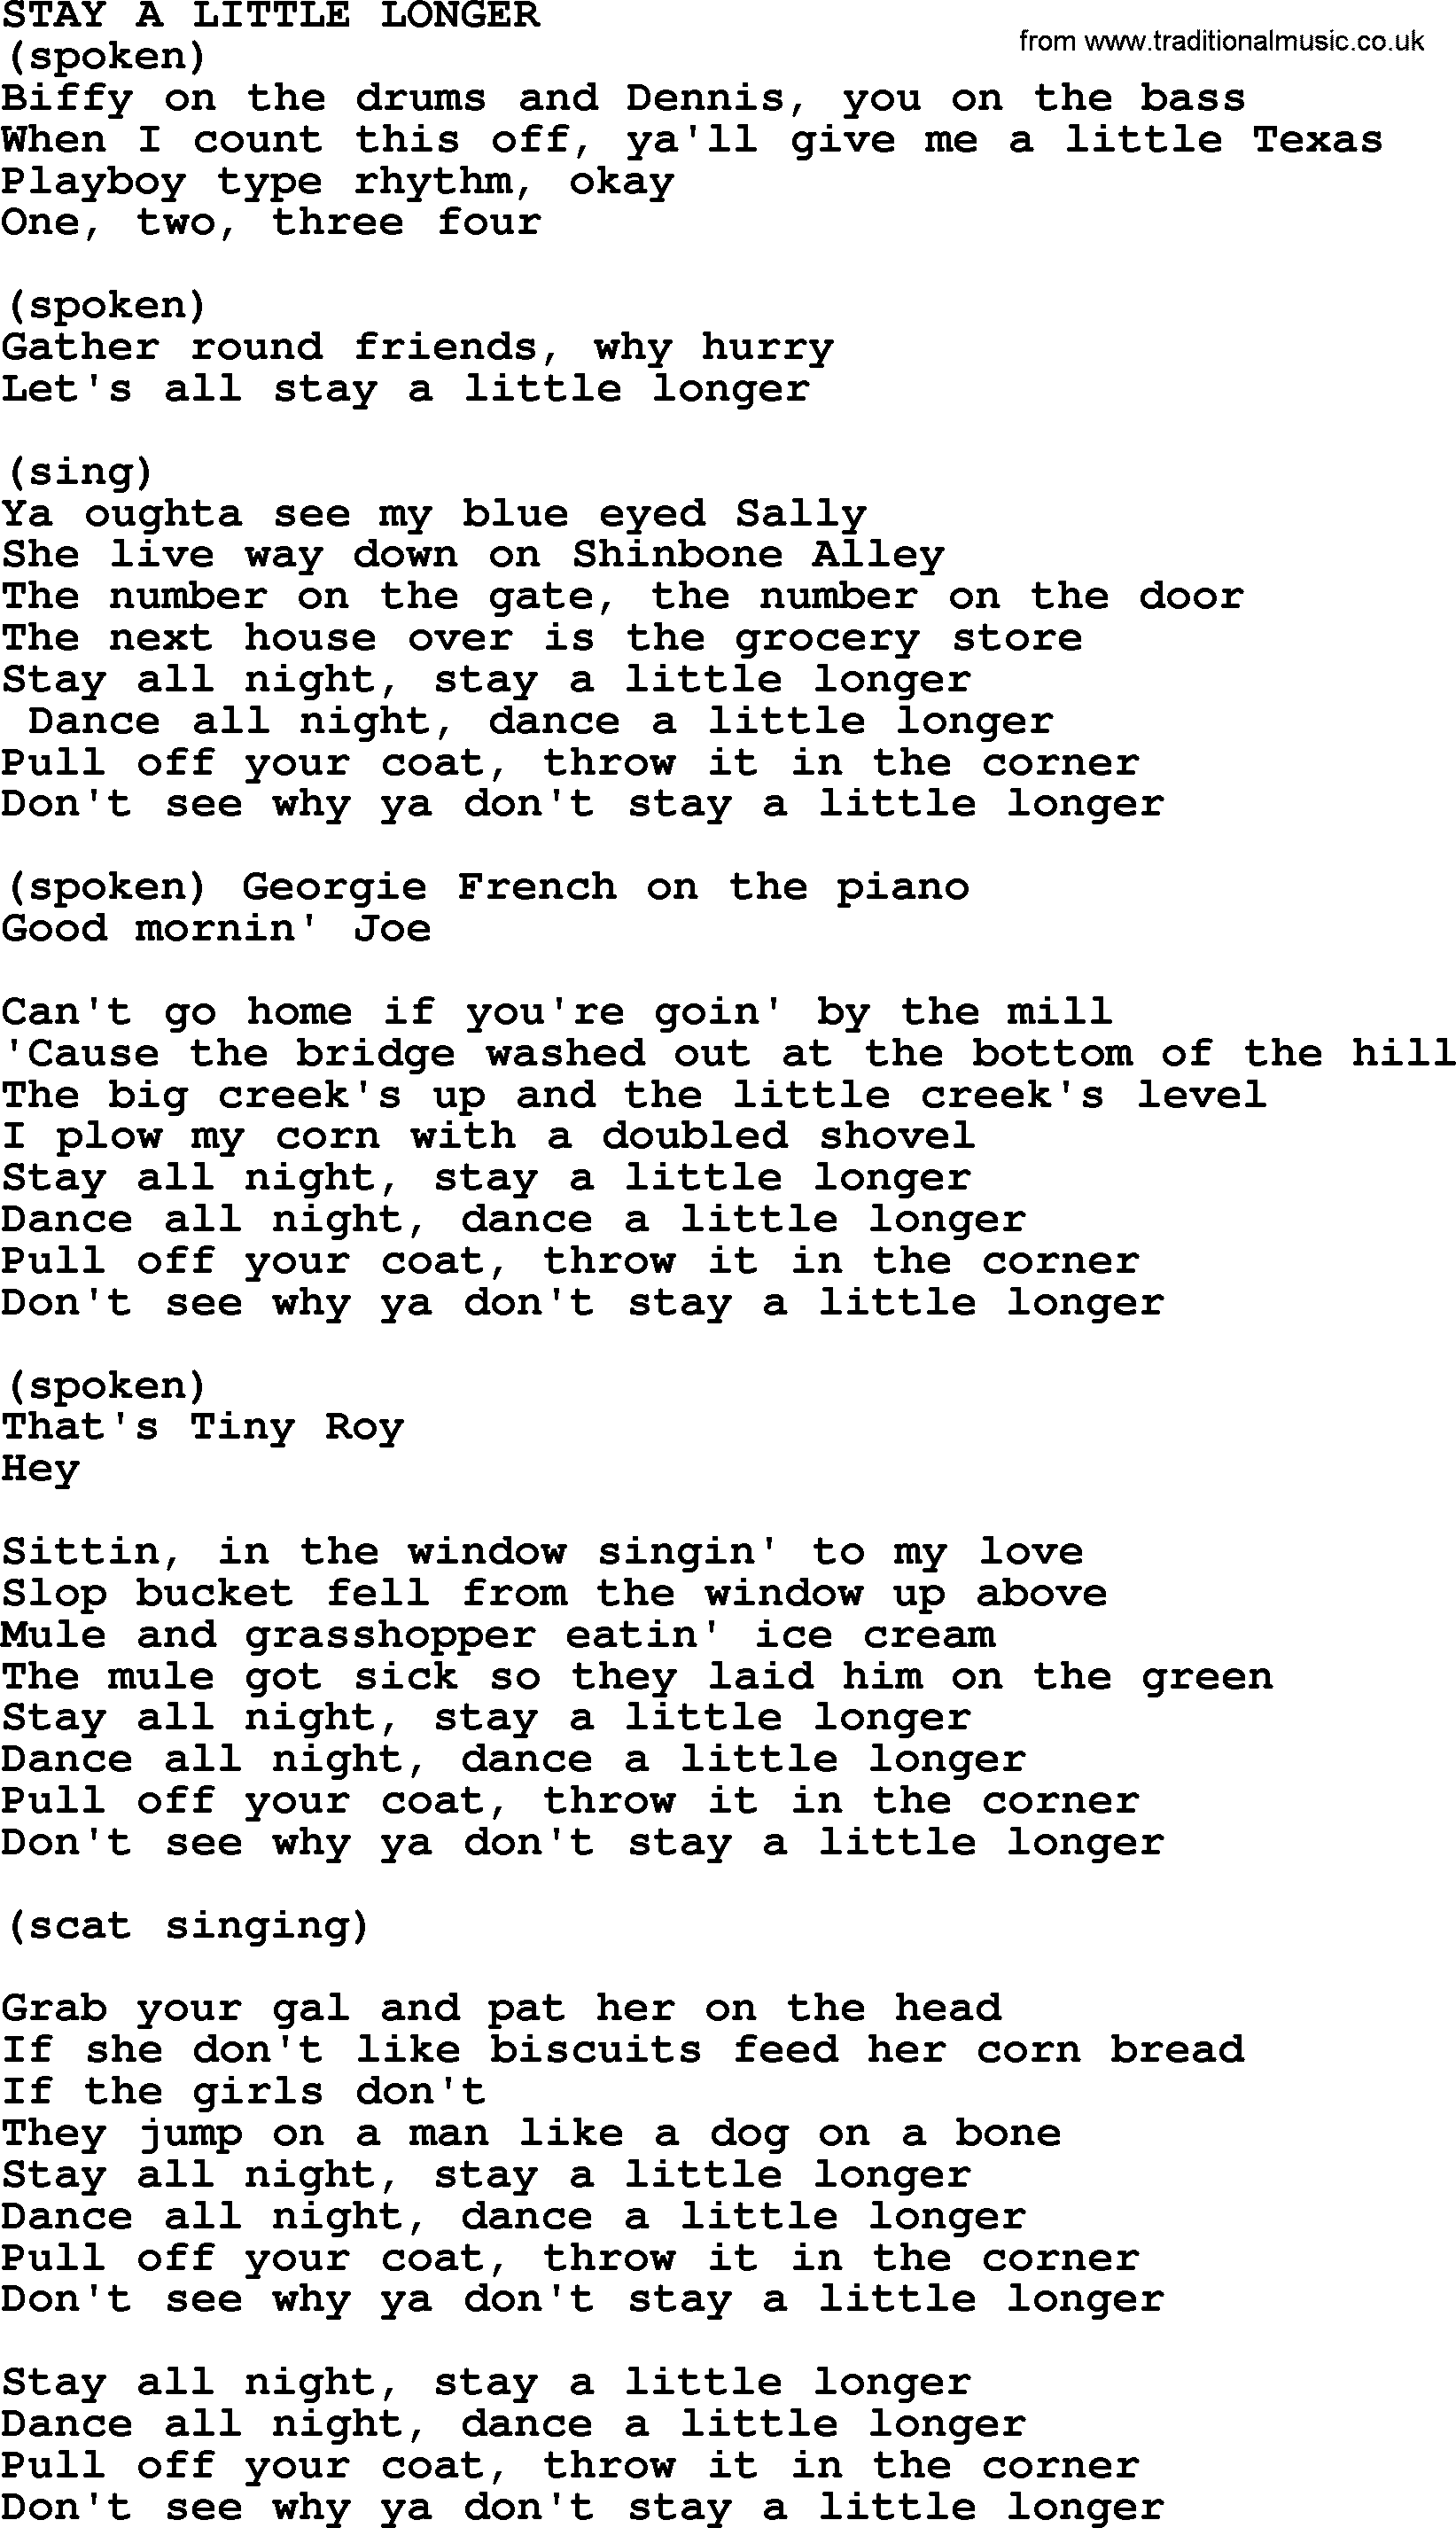 Merle Haggard song: Stay A Little Longer, lyrics.